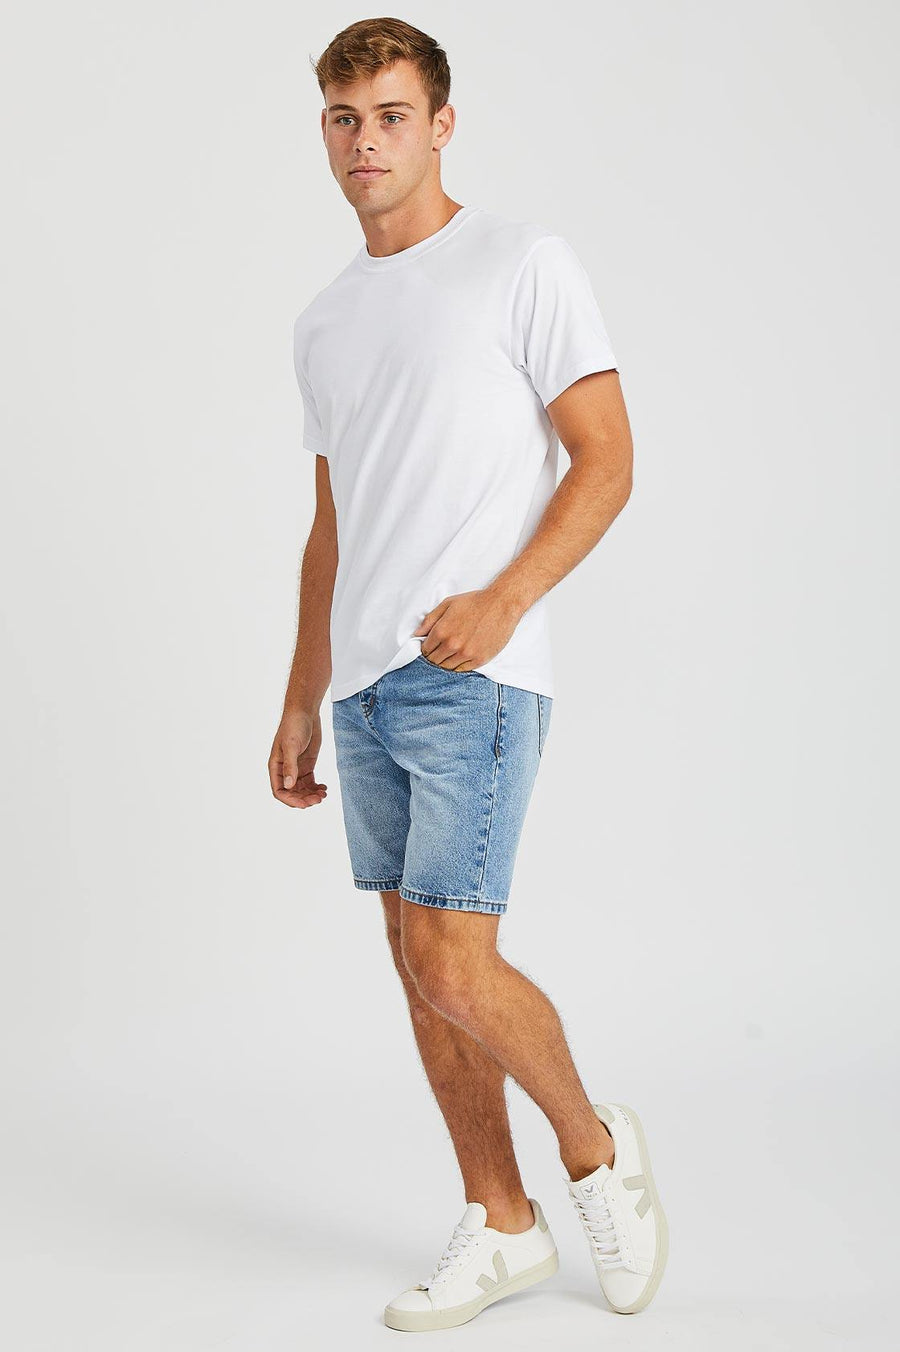 Bay Shorts Light Blue Wash - Dr Denim Jeans - Australia & NZ